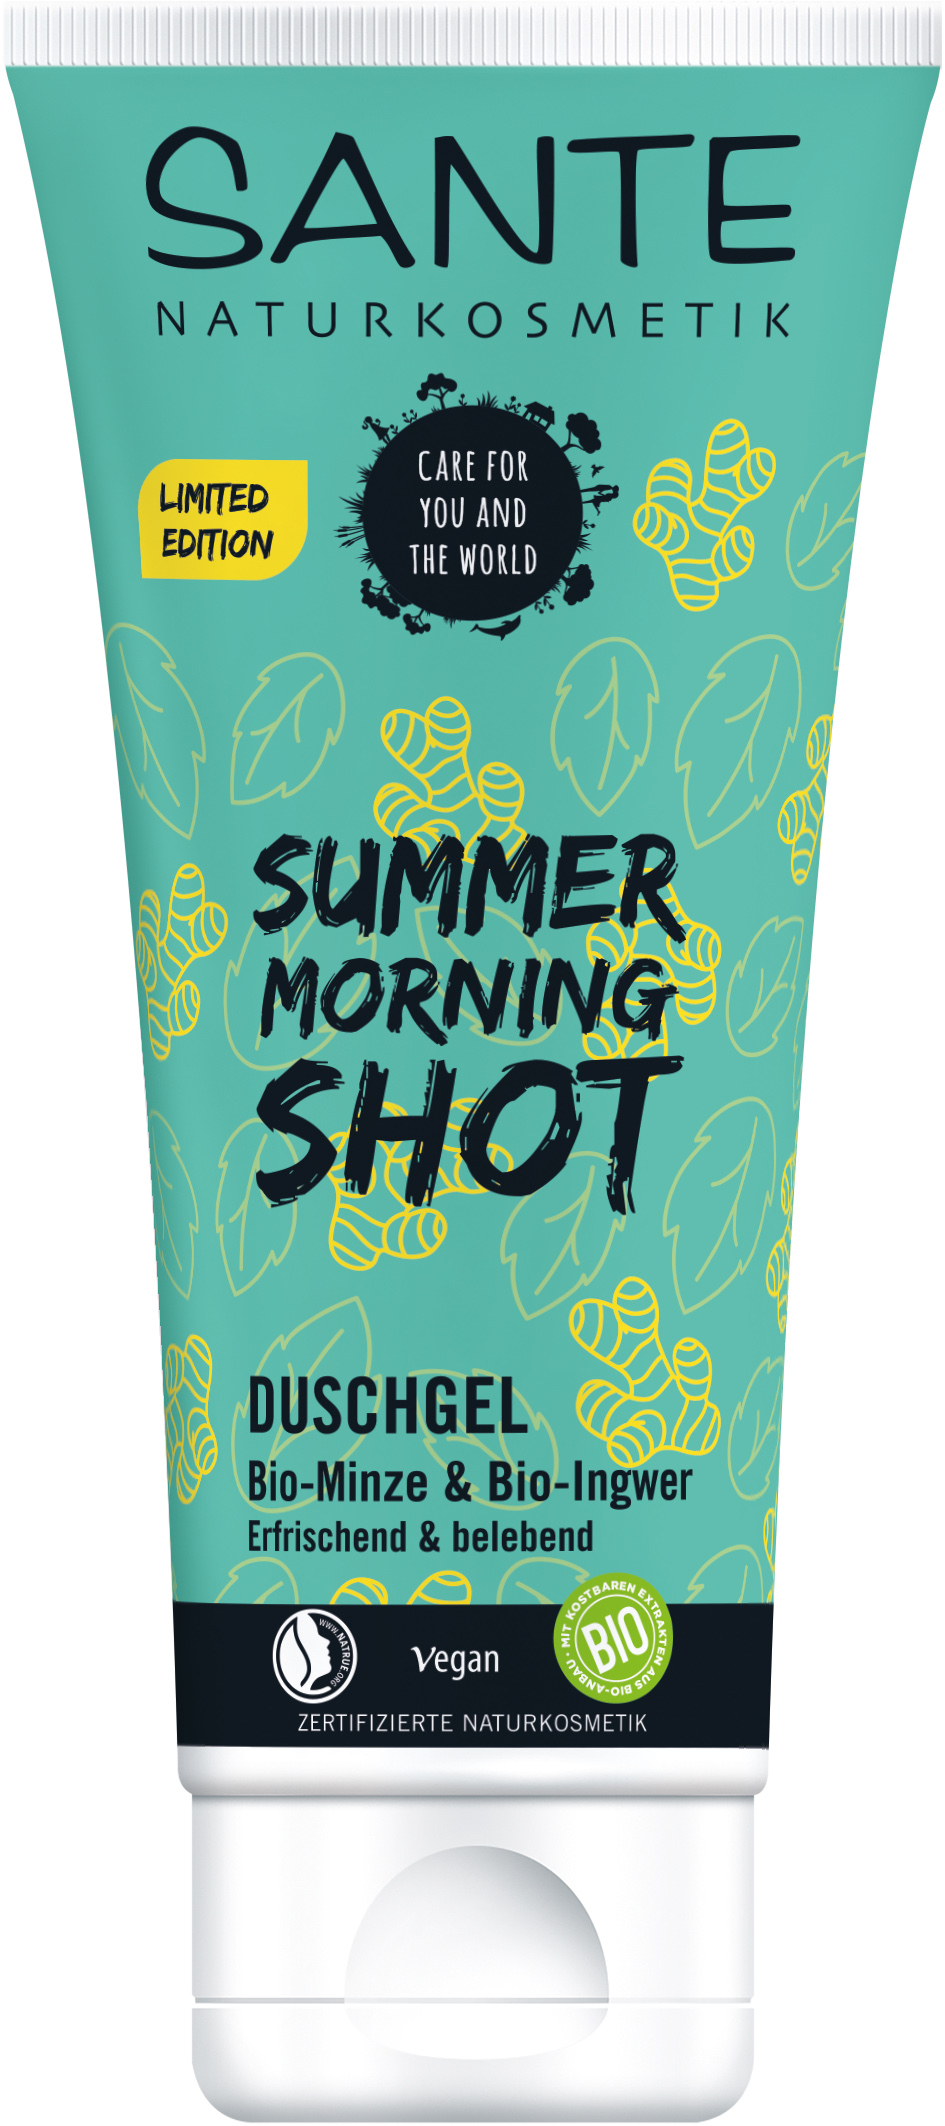 Bio-Minze & SANTE Morning Naturkosmetik Summer Bio-Ingwer Duschgel Shot |